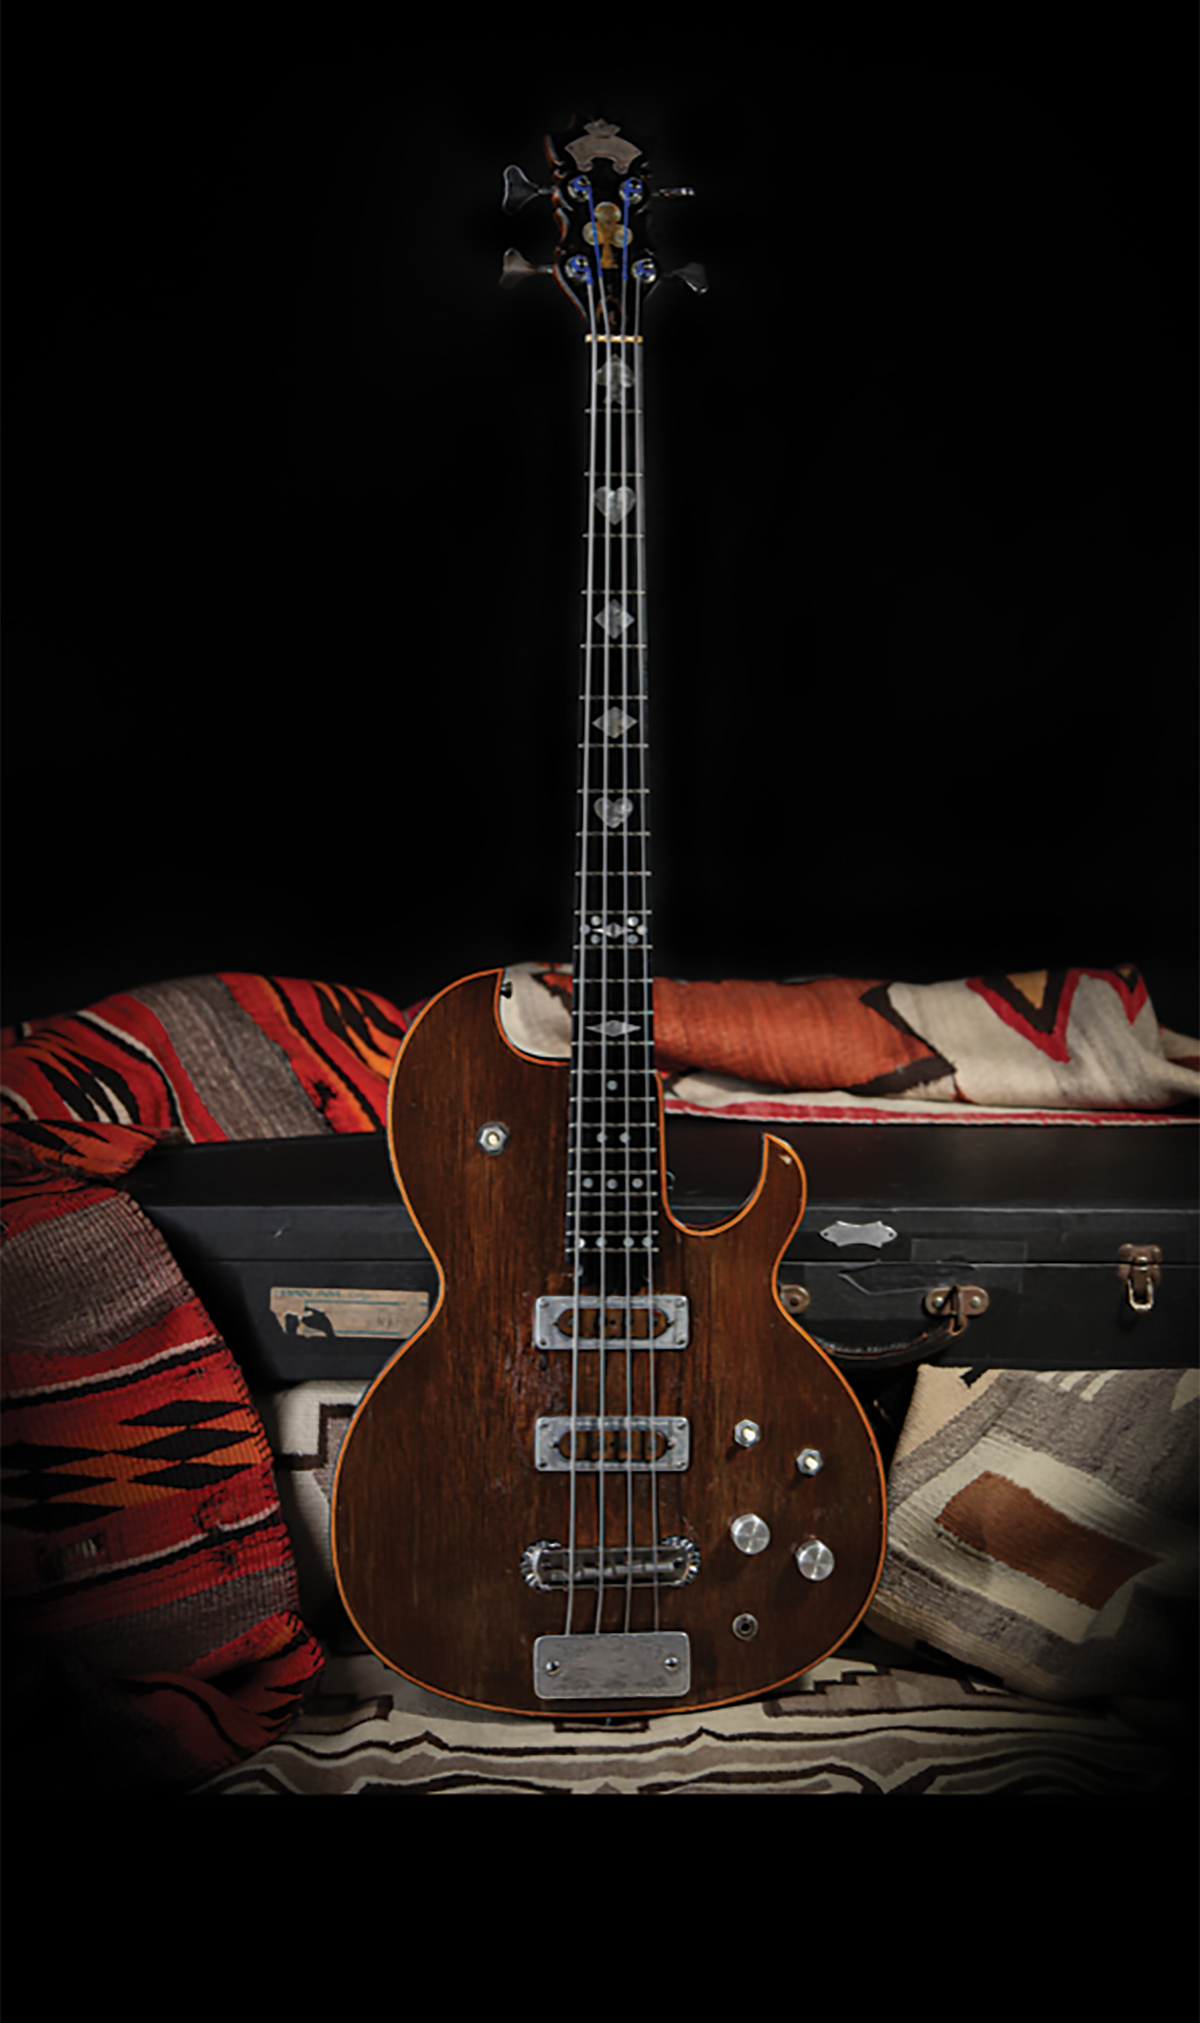 Ronnie Lane’s Custom Zemaitis Bass